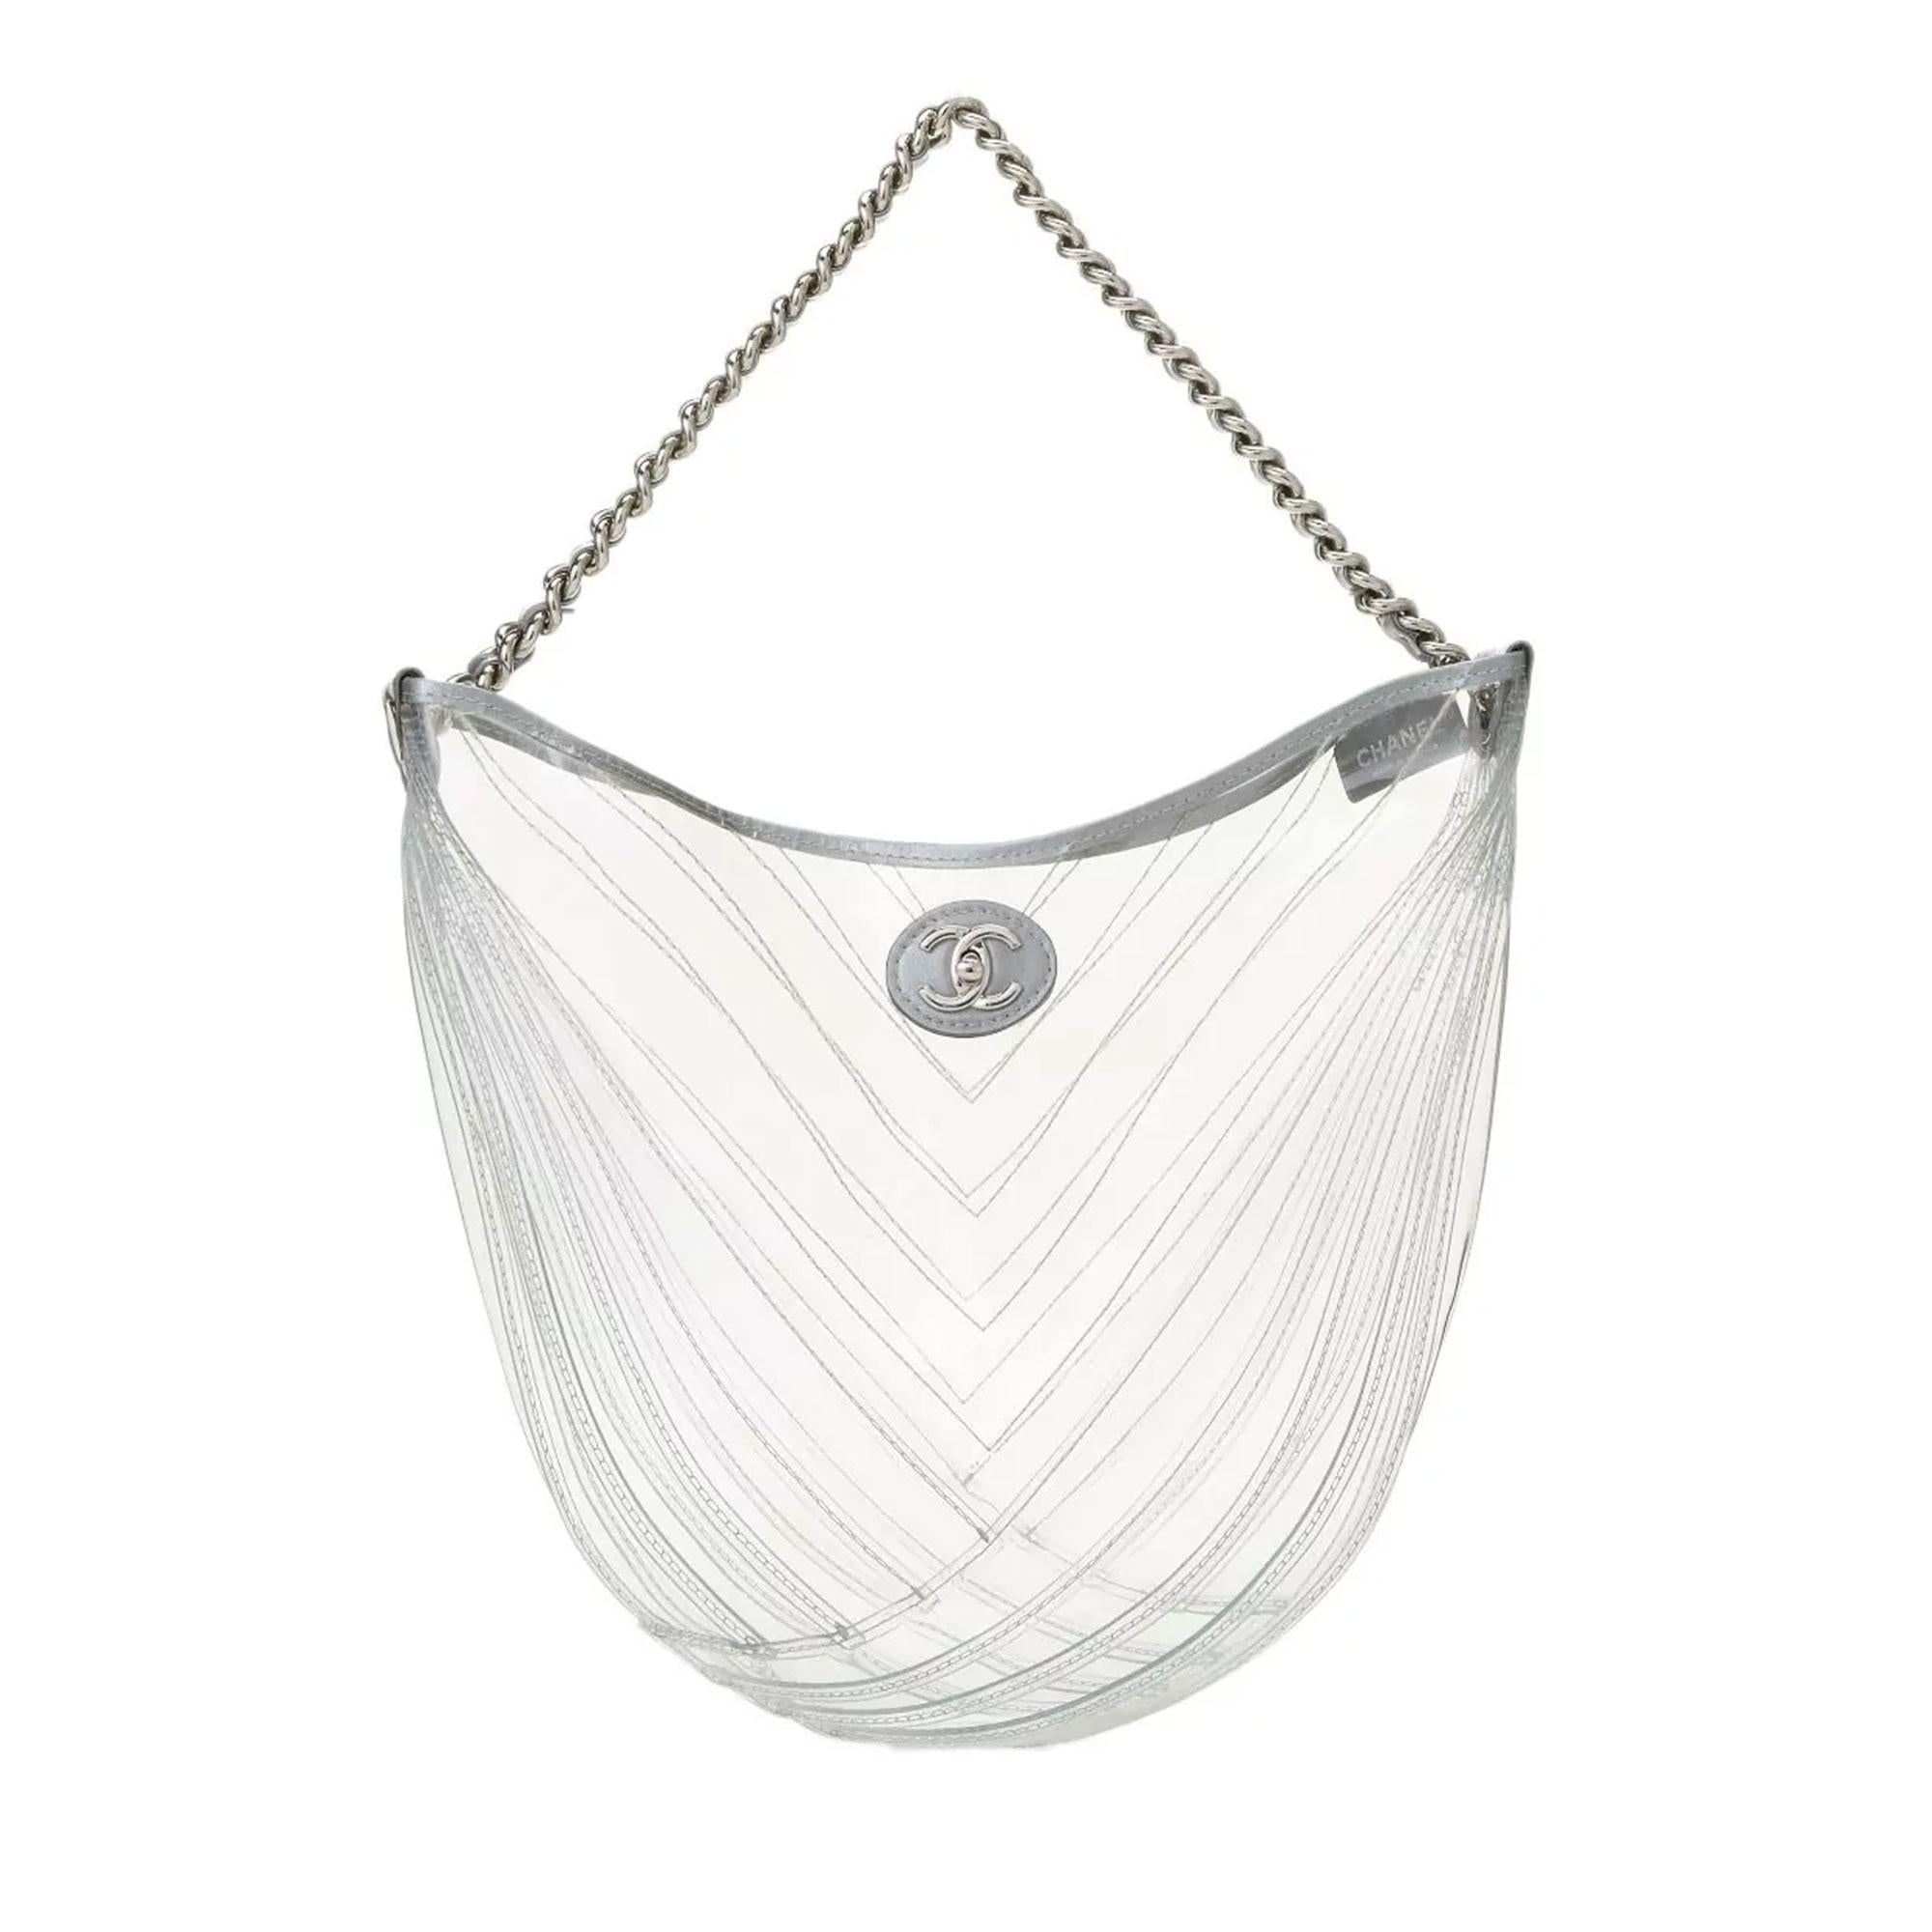 Gray Chanel Hobo Handbag Transparent Teardrop Spring 2018 Clear Pvc Satchel For Sale